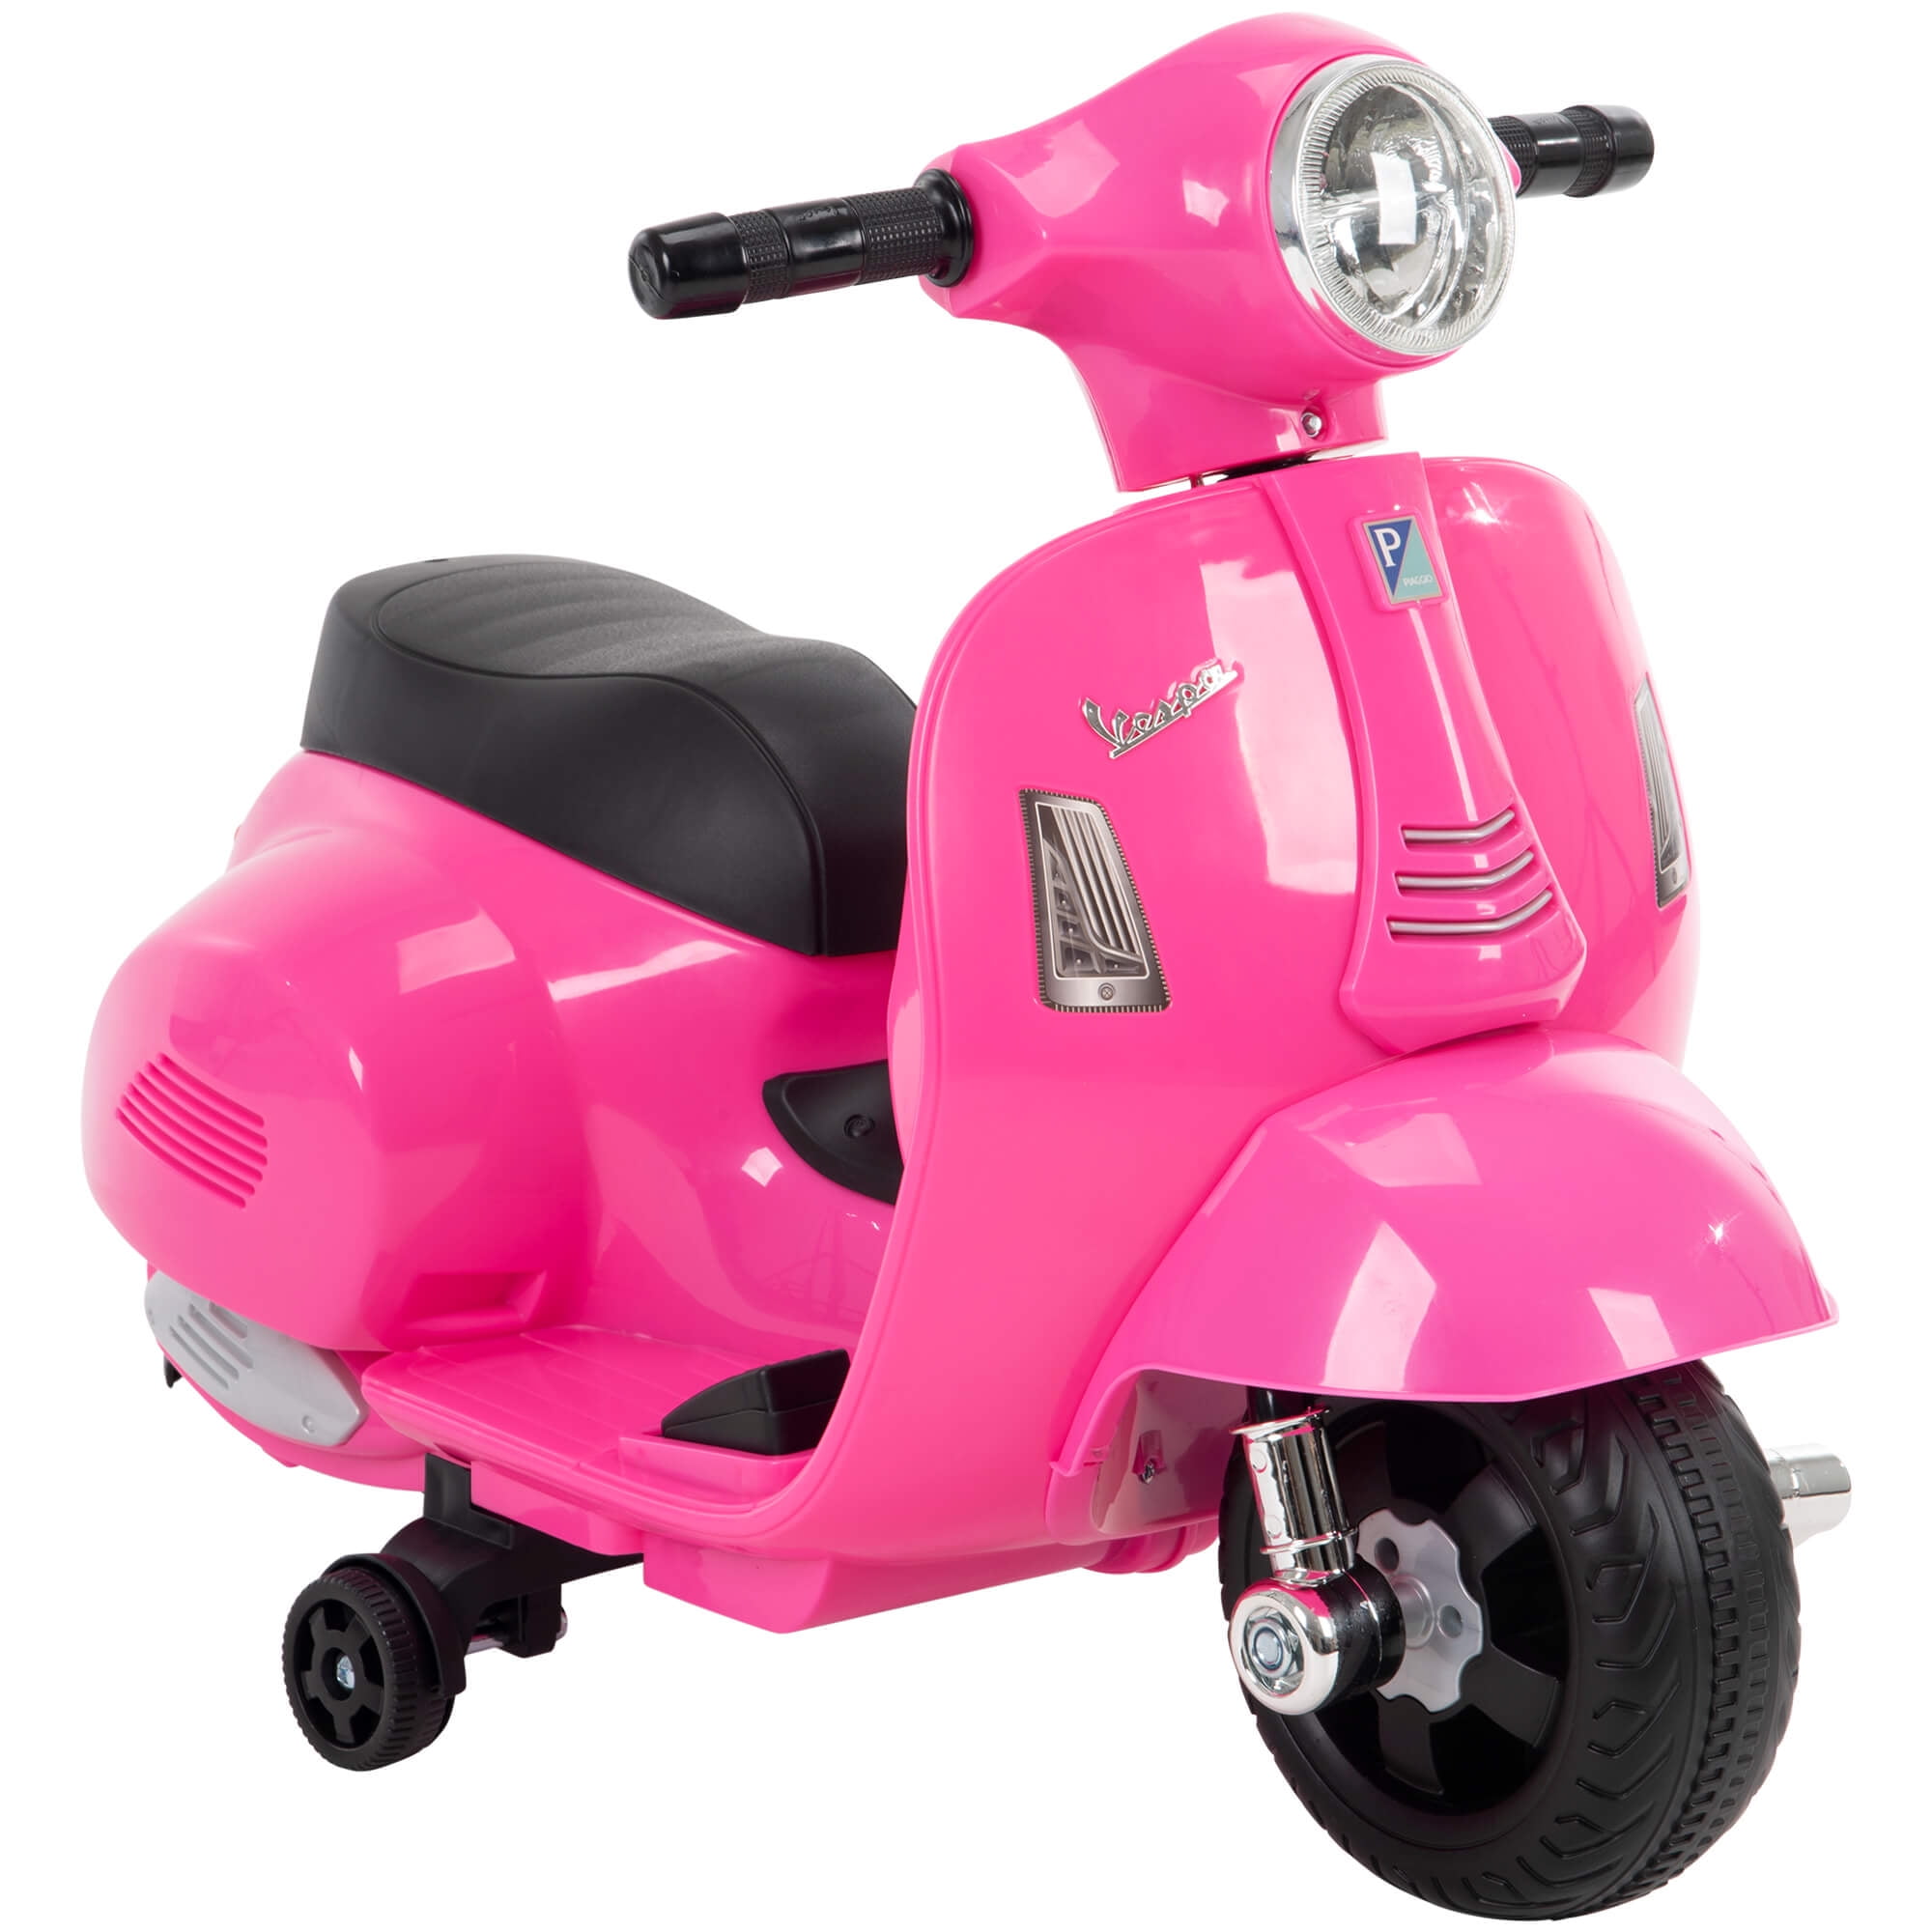 Huffy 6V Vespa Ride-On Electric Scooter for Kids, Pink - Walmart.com ...